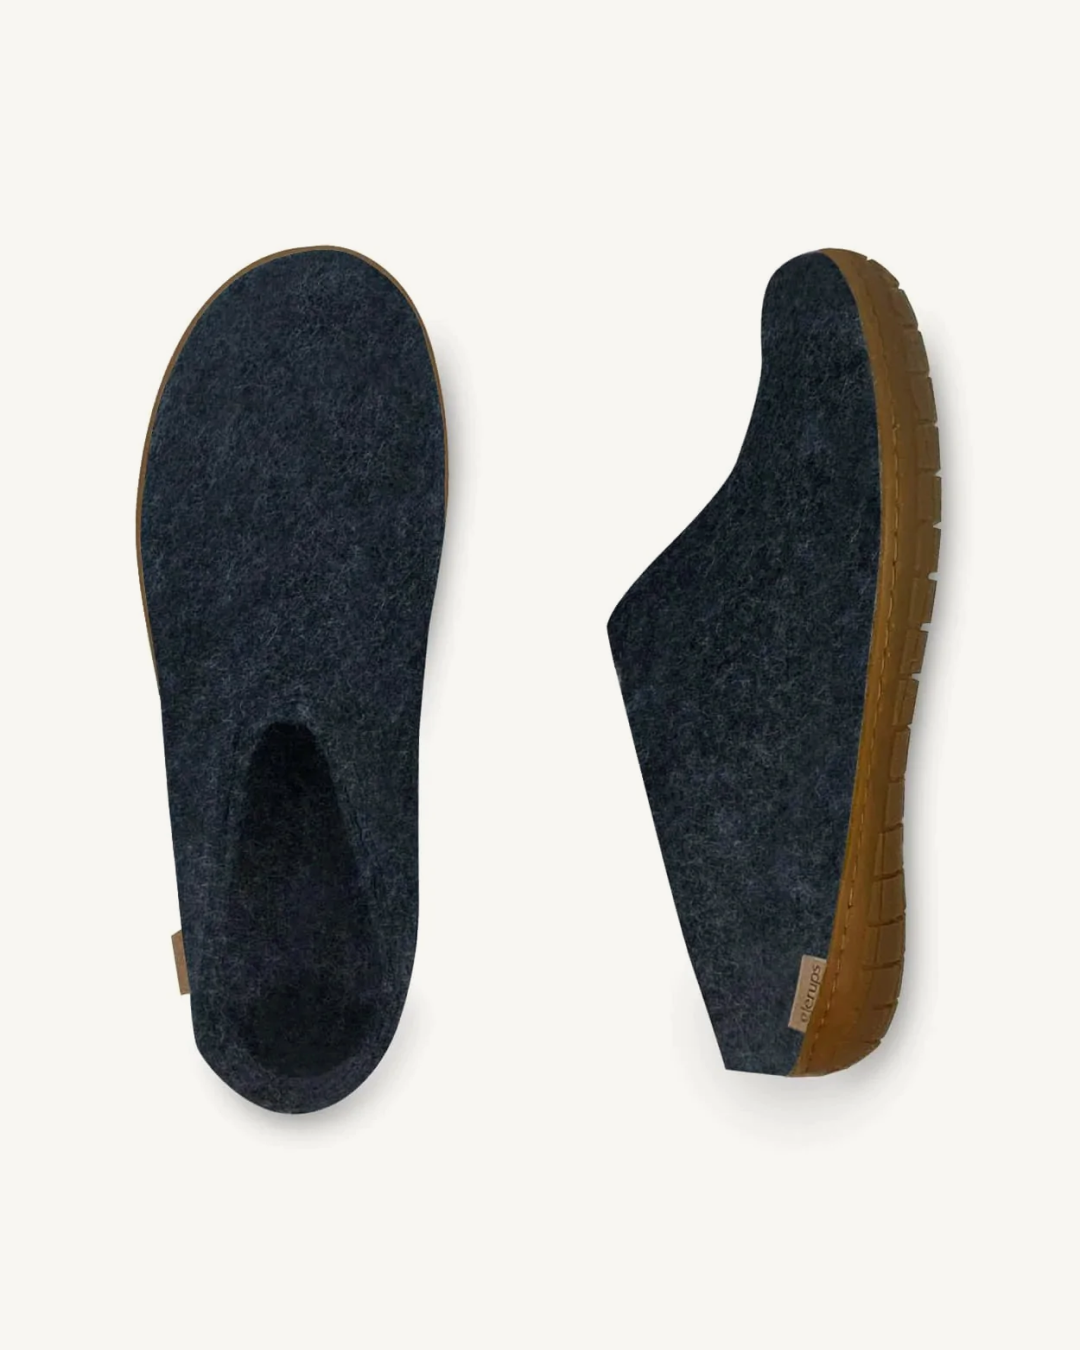 Leeds Anoi Meyella Glerups | The Shoe in Denim w/ Honey Rubber Sole - Imperfects